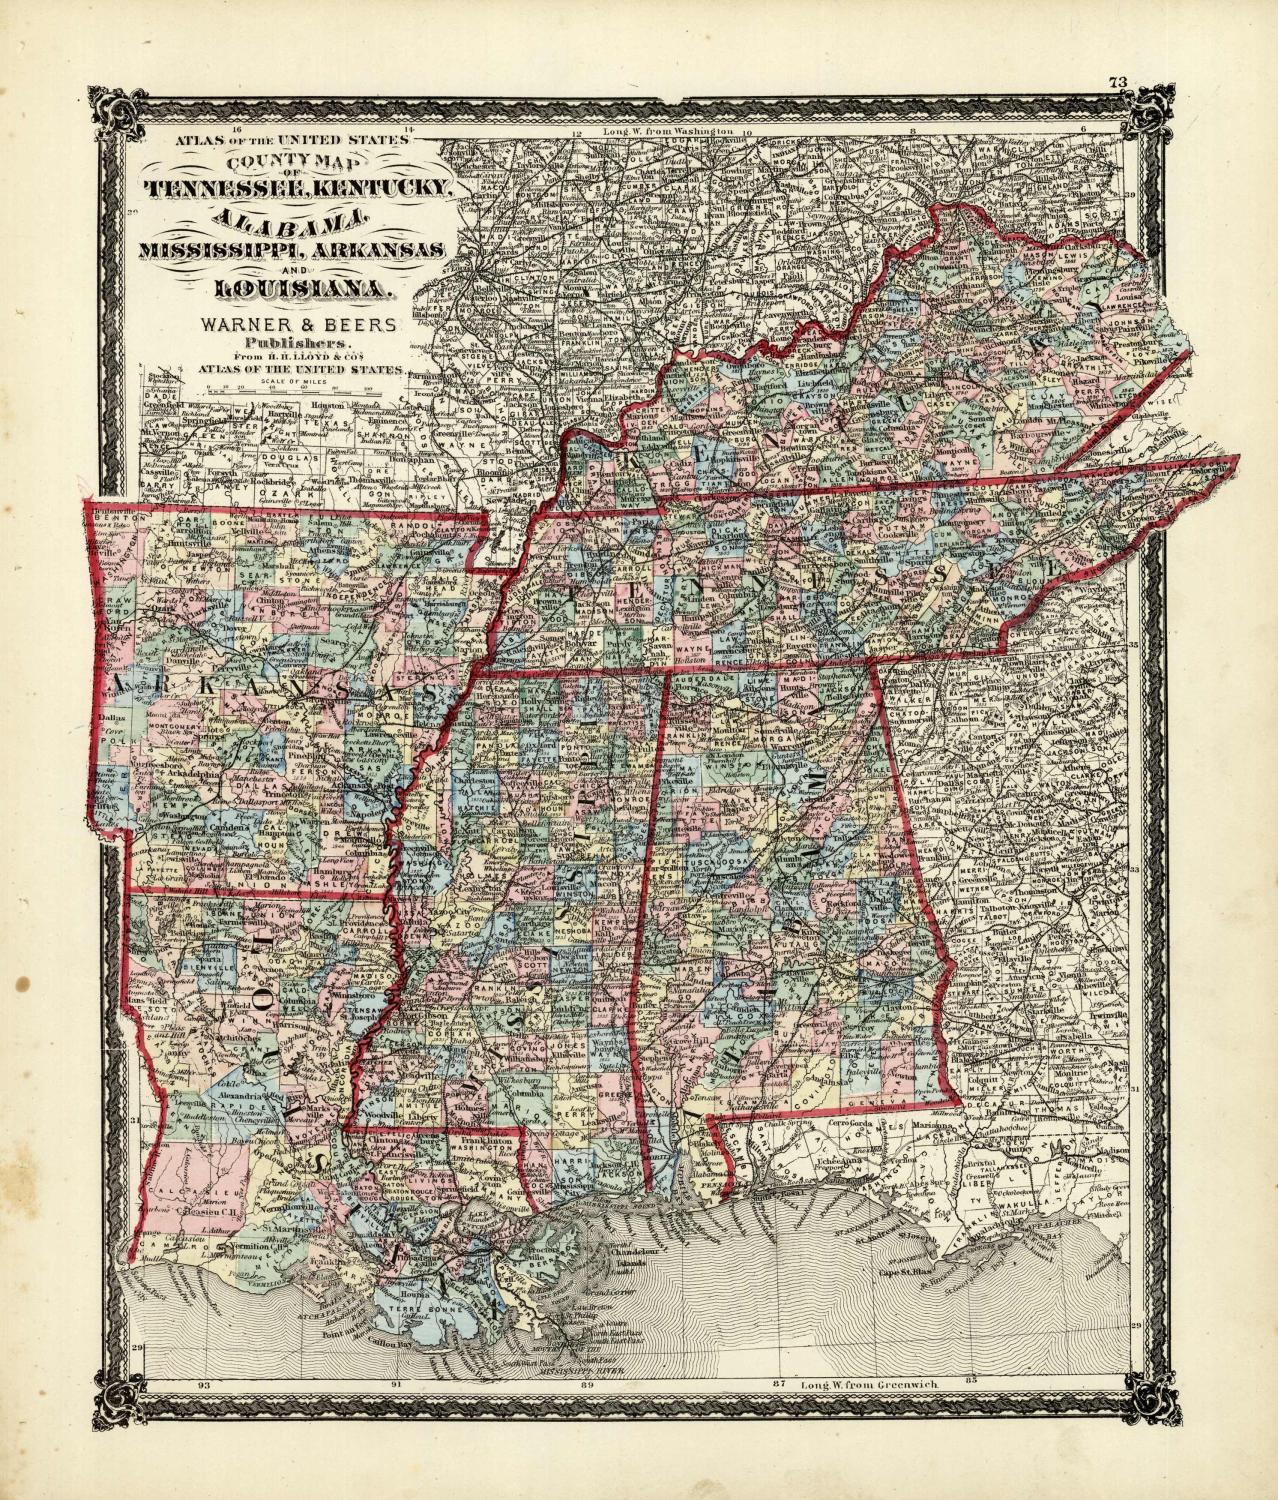 County Map of Louisiana, Mississippi, and Arkansas - Art Source  International